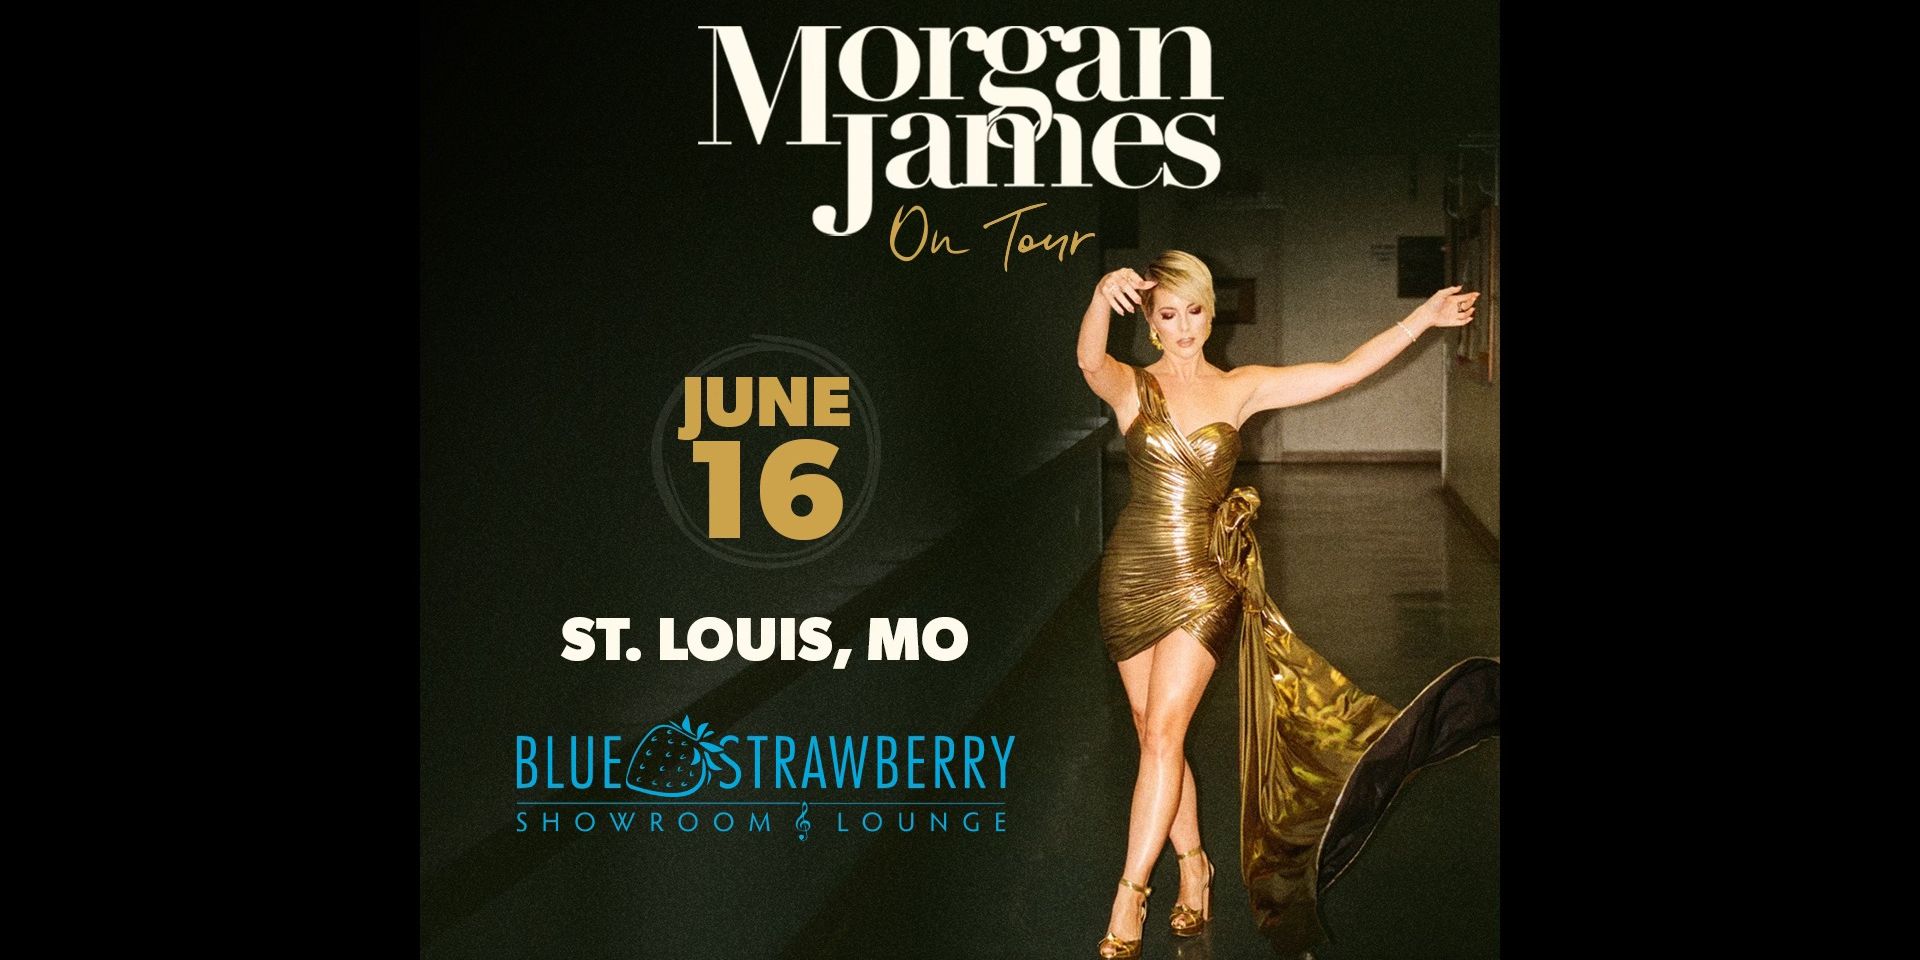 Morgan James promotional image